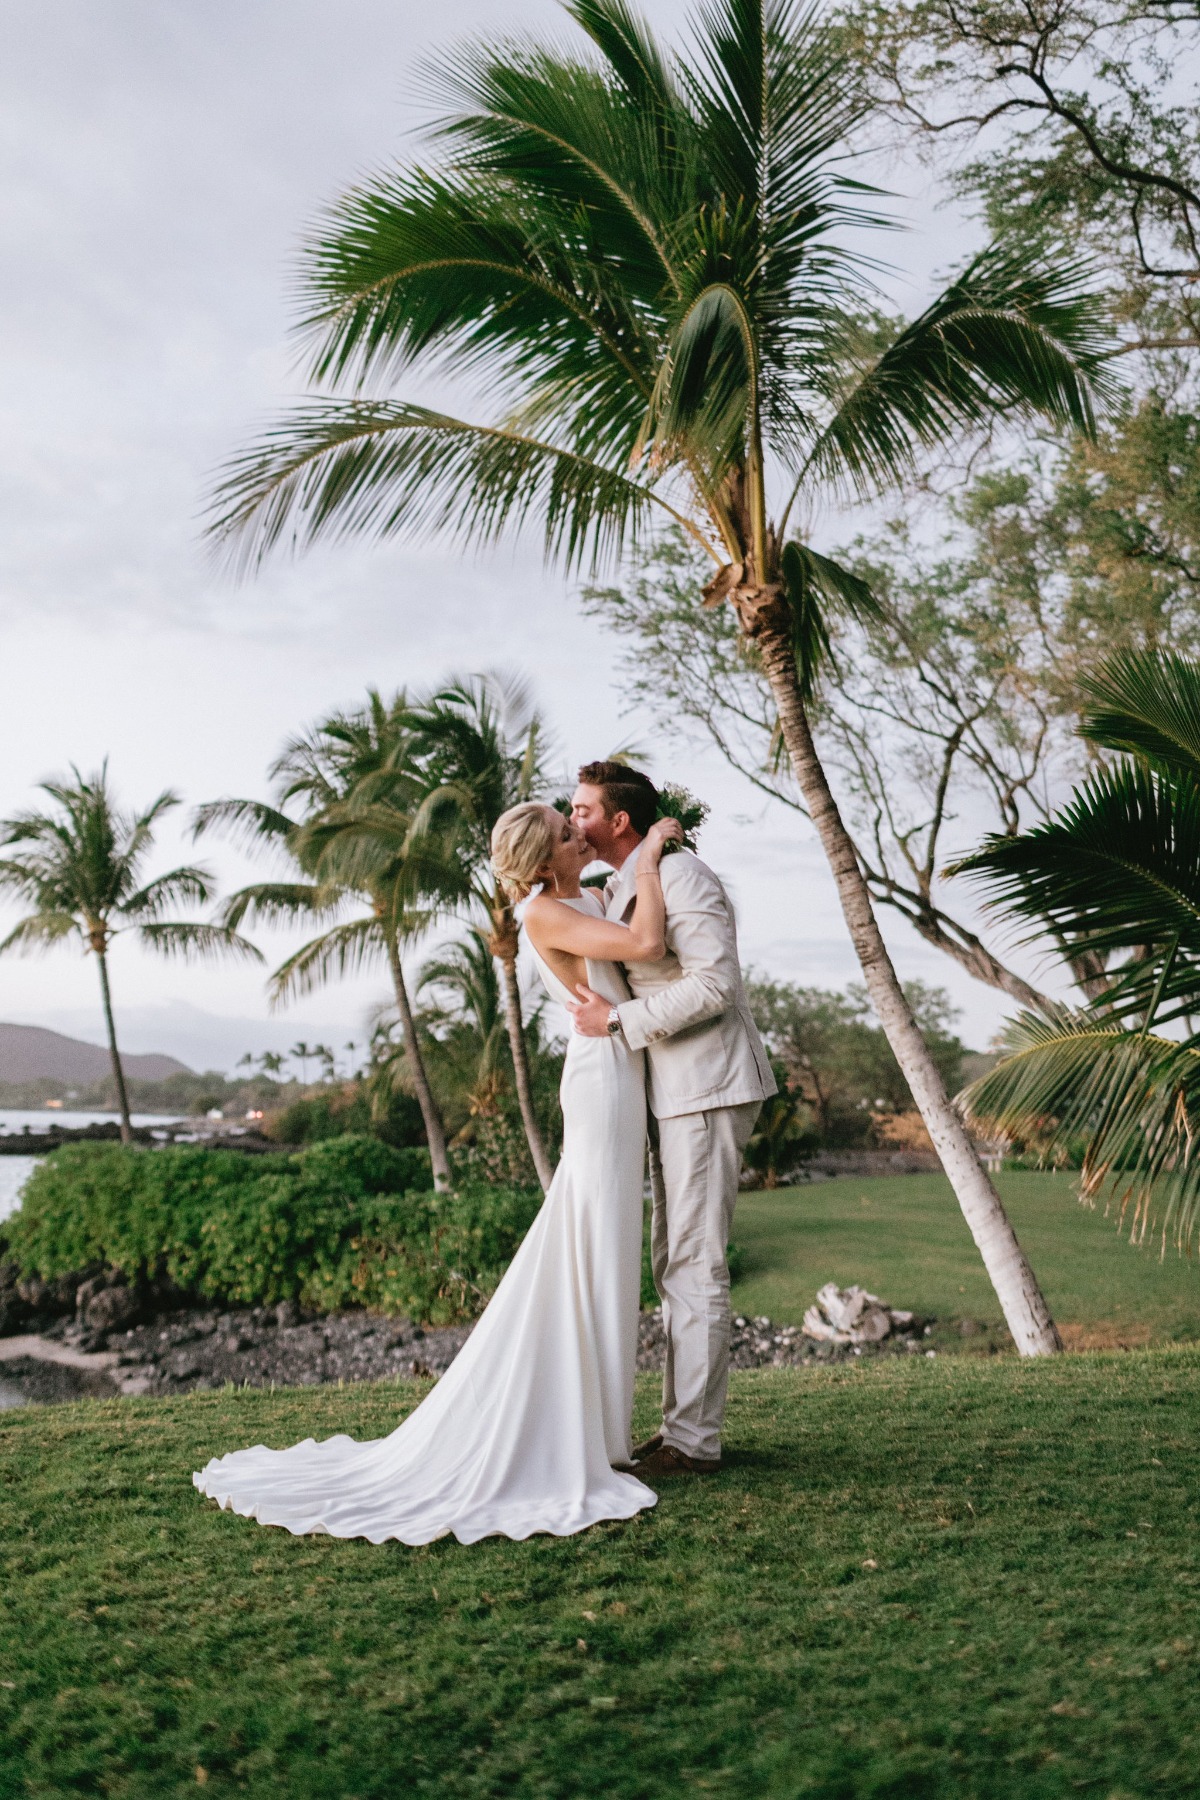 A Chic and Contemporary Maui Wedding